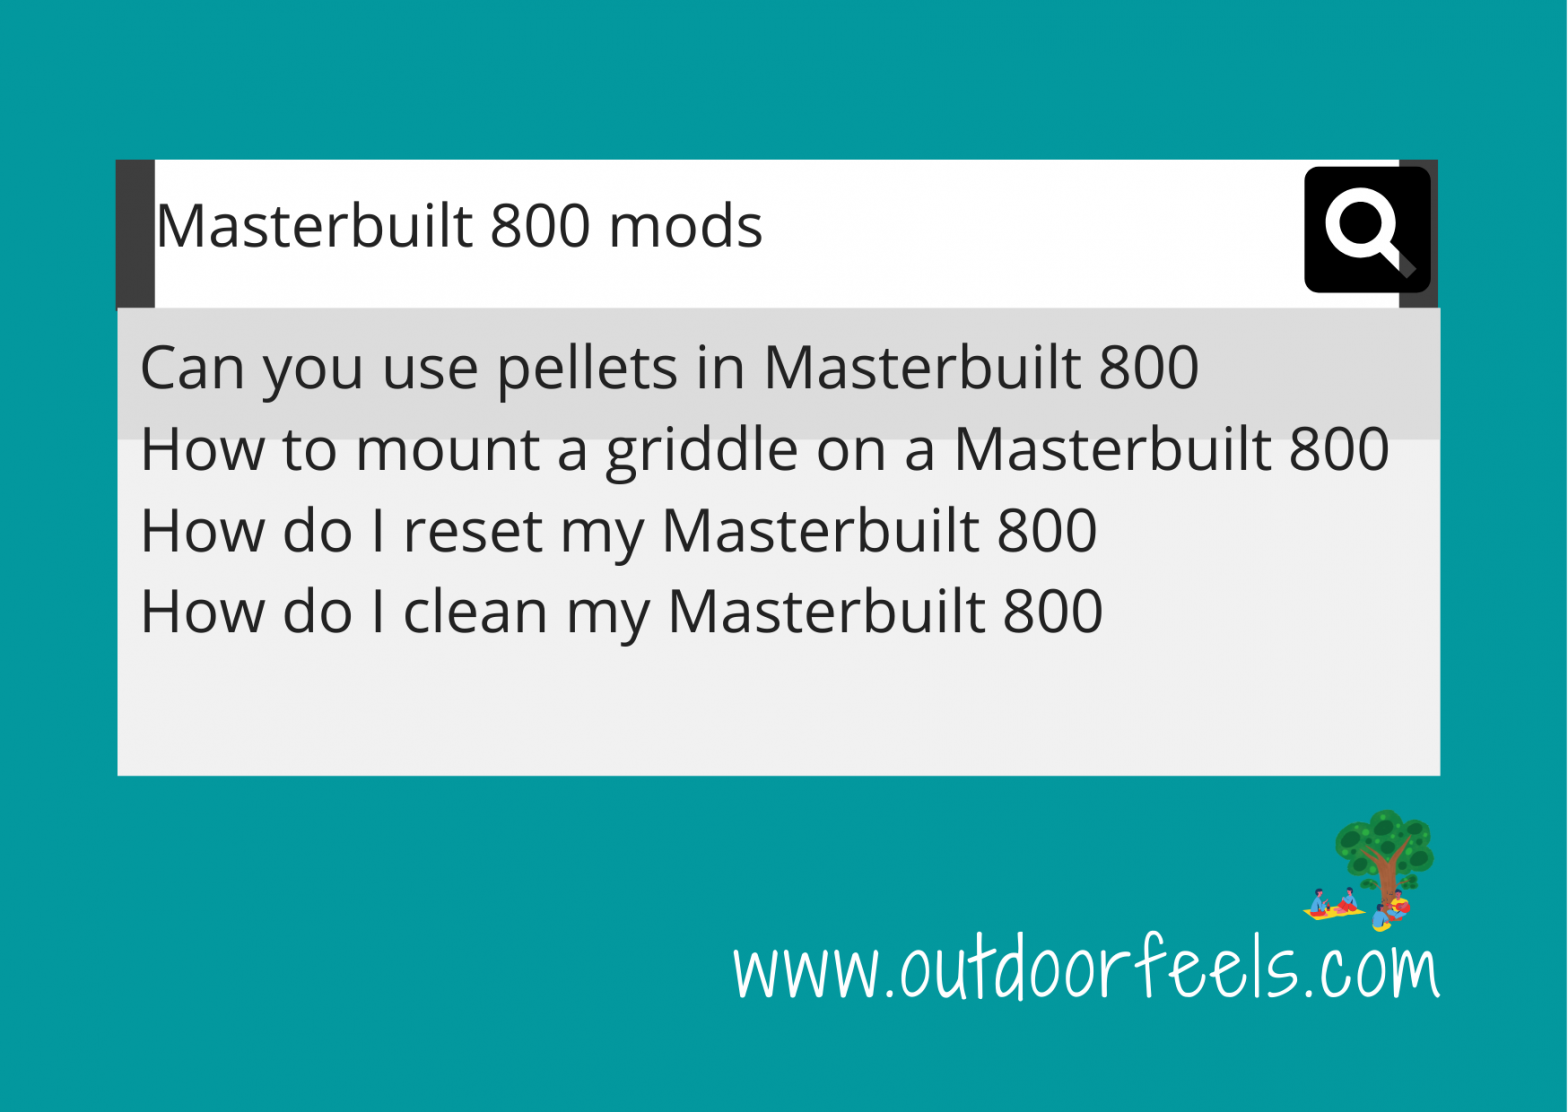 Masterbuilt 800 mods